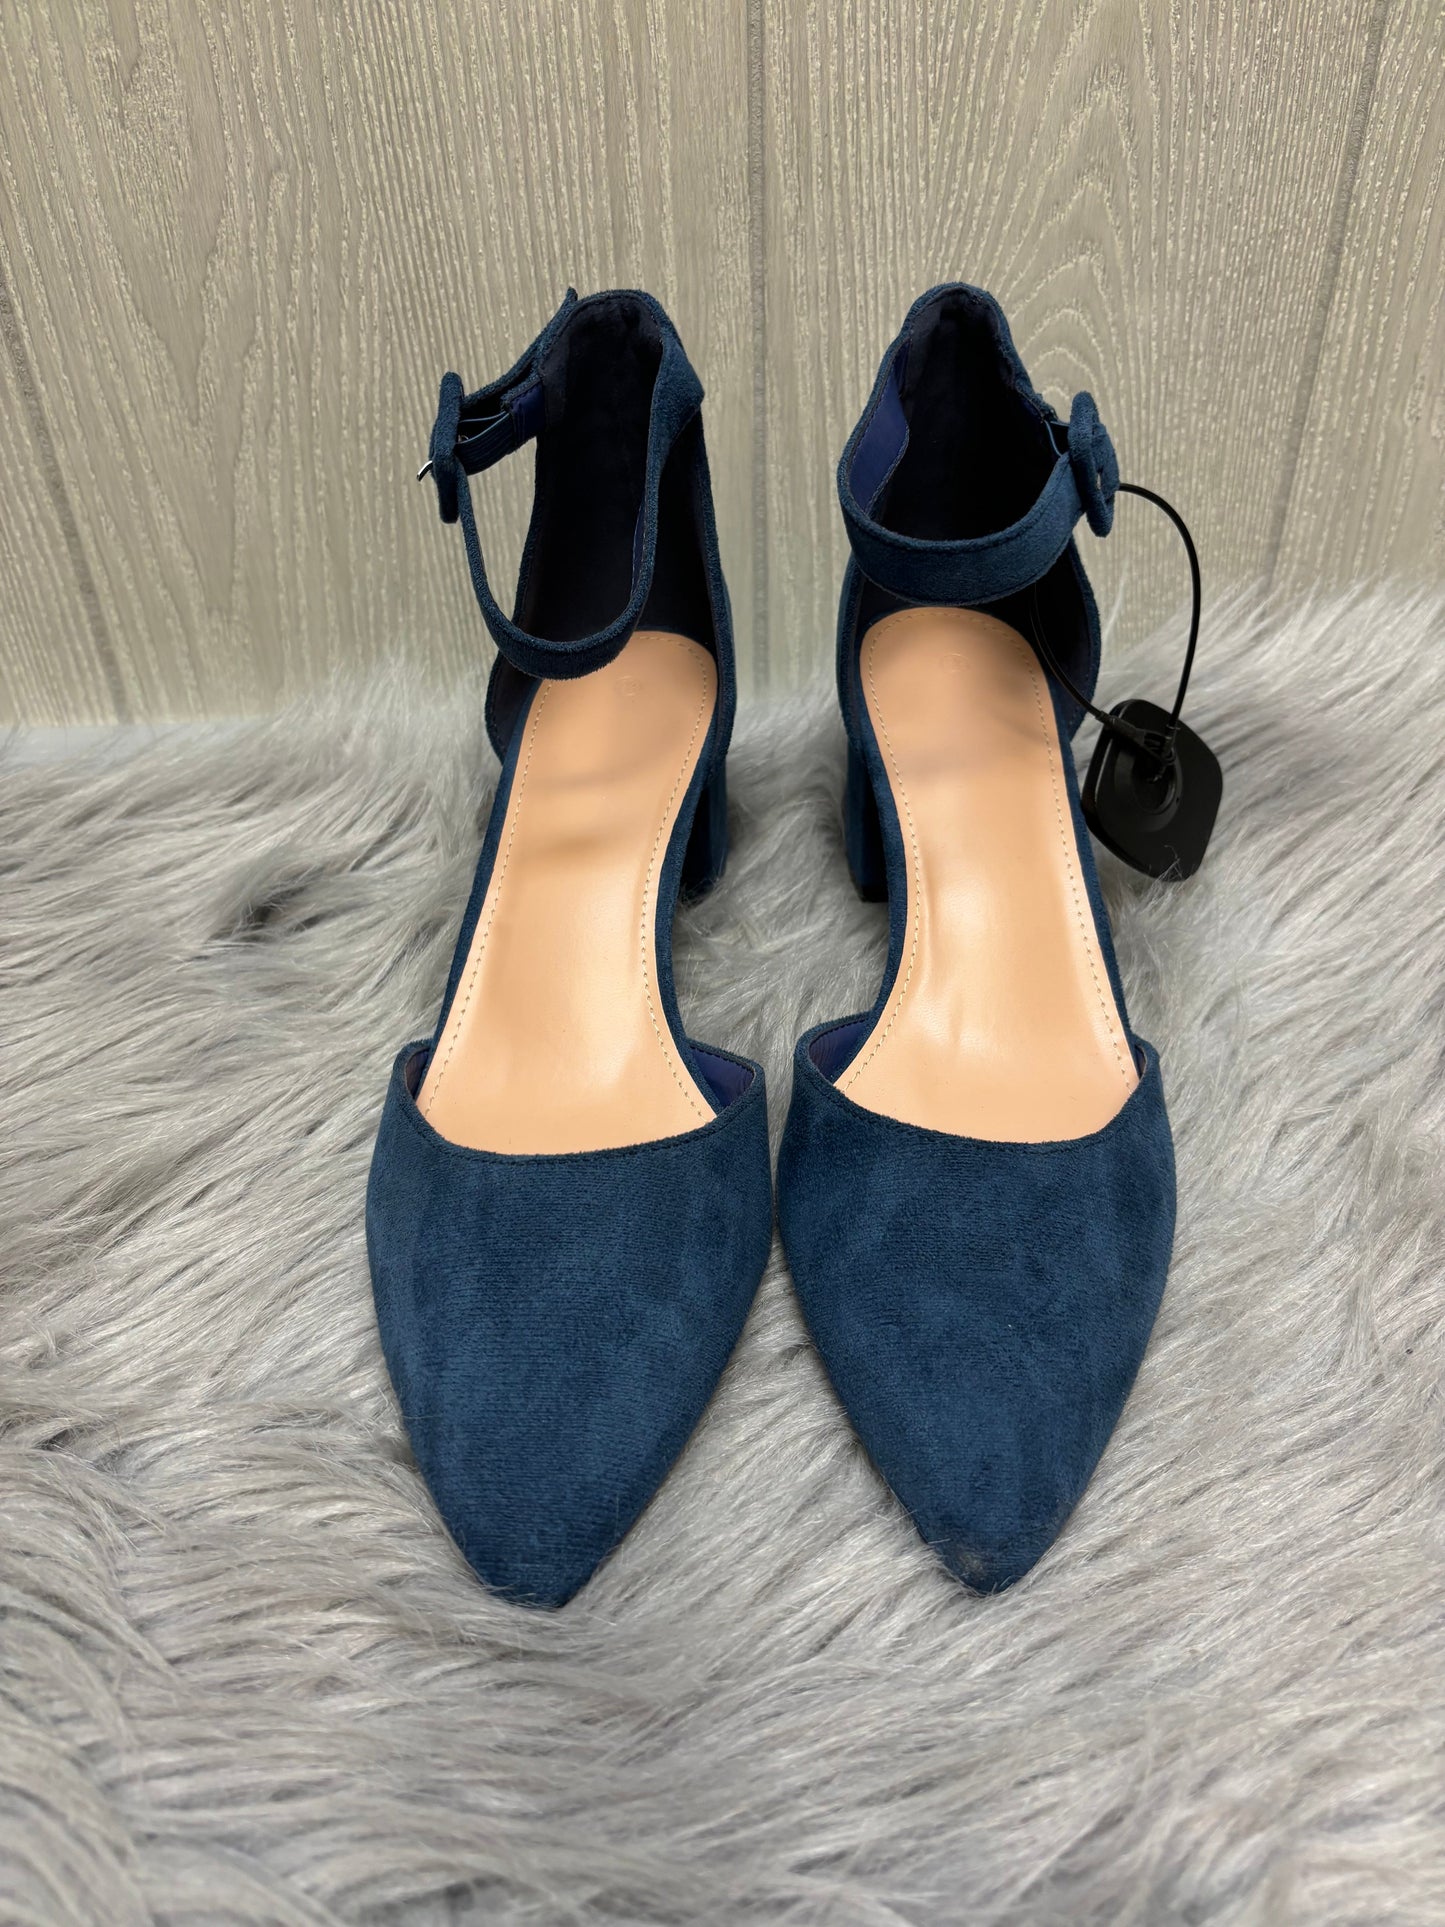 Blue Shoes Heels Block Clothes Mentor, Size 9.5